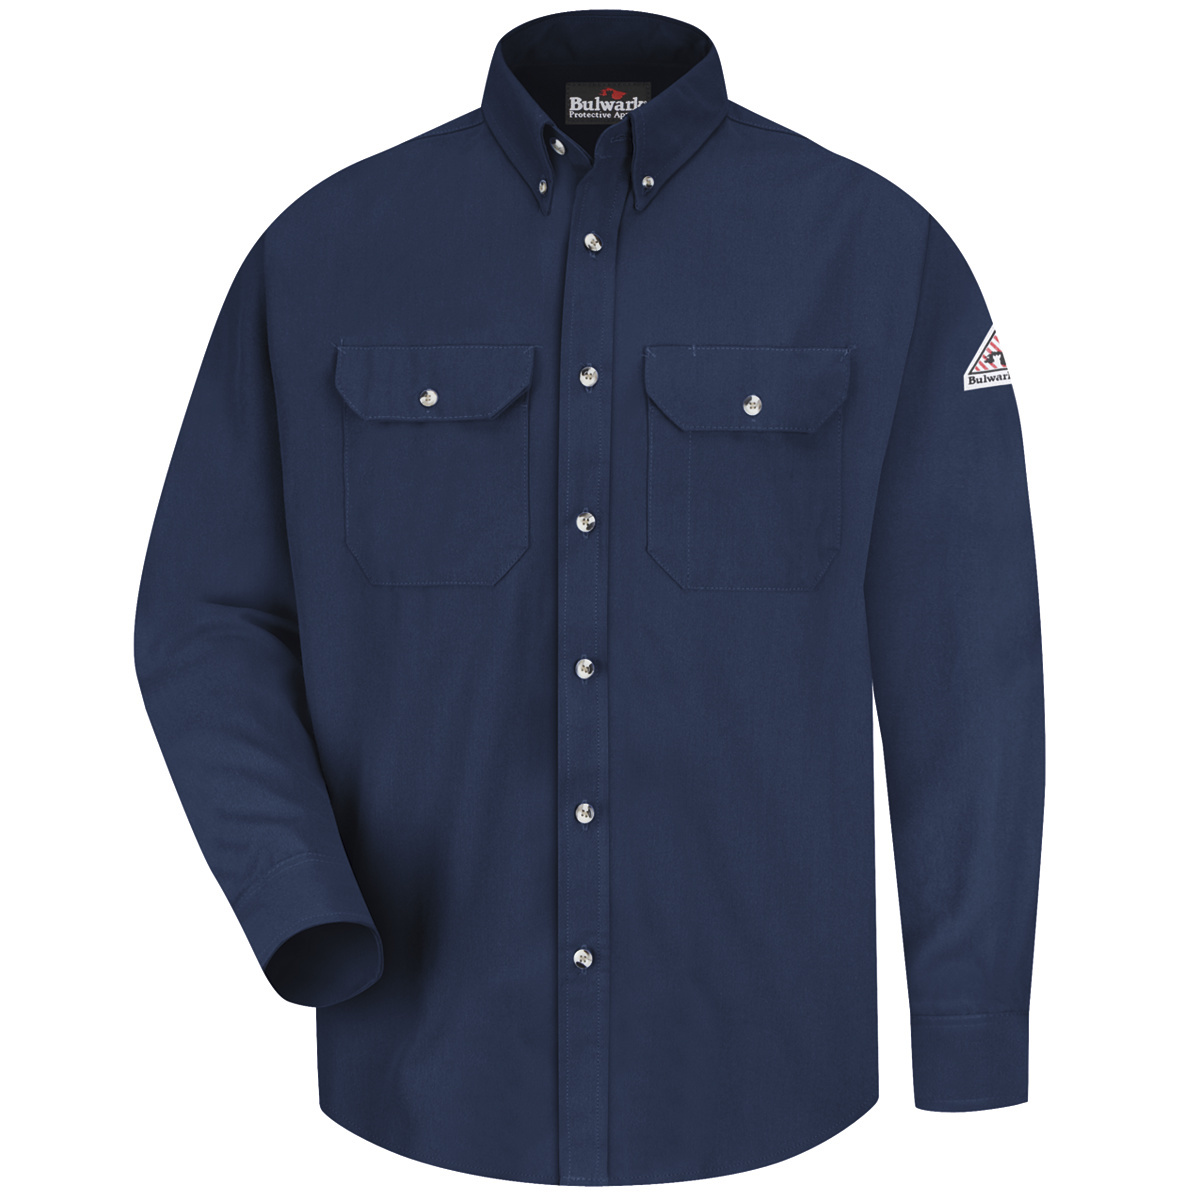 Bulwark® 2X Regular Navy Blue Modacrylic/Lyocell/Aramid Flame Resistant Dress Uniform Shirt With Button Front Closure